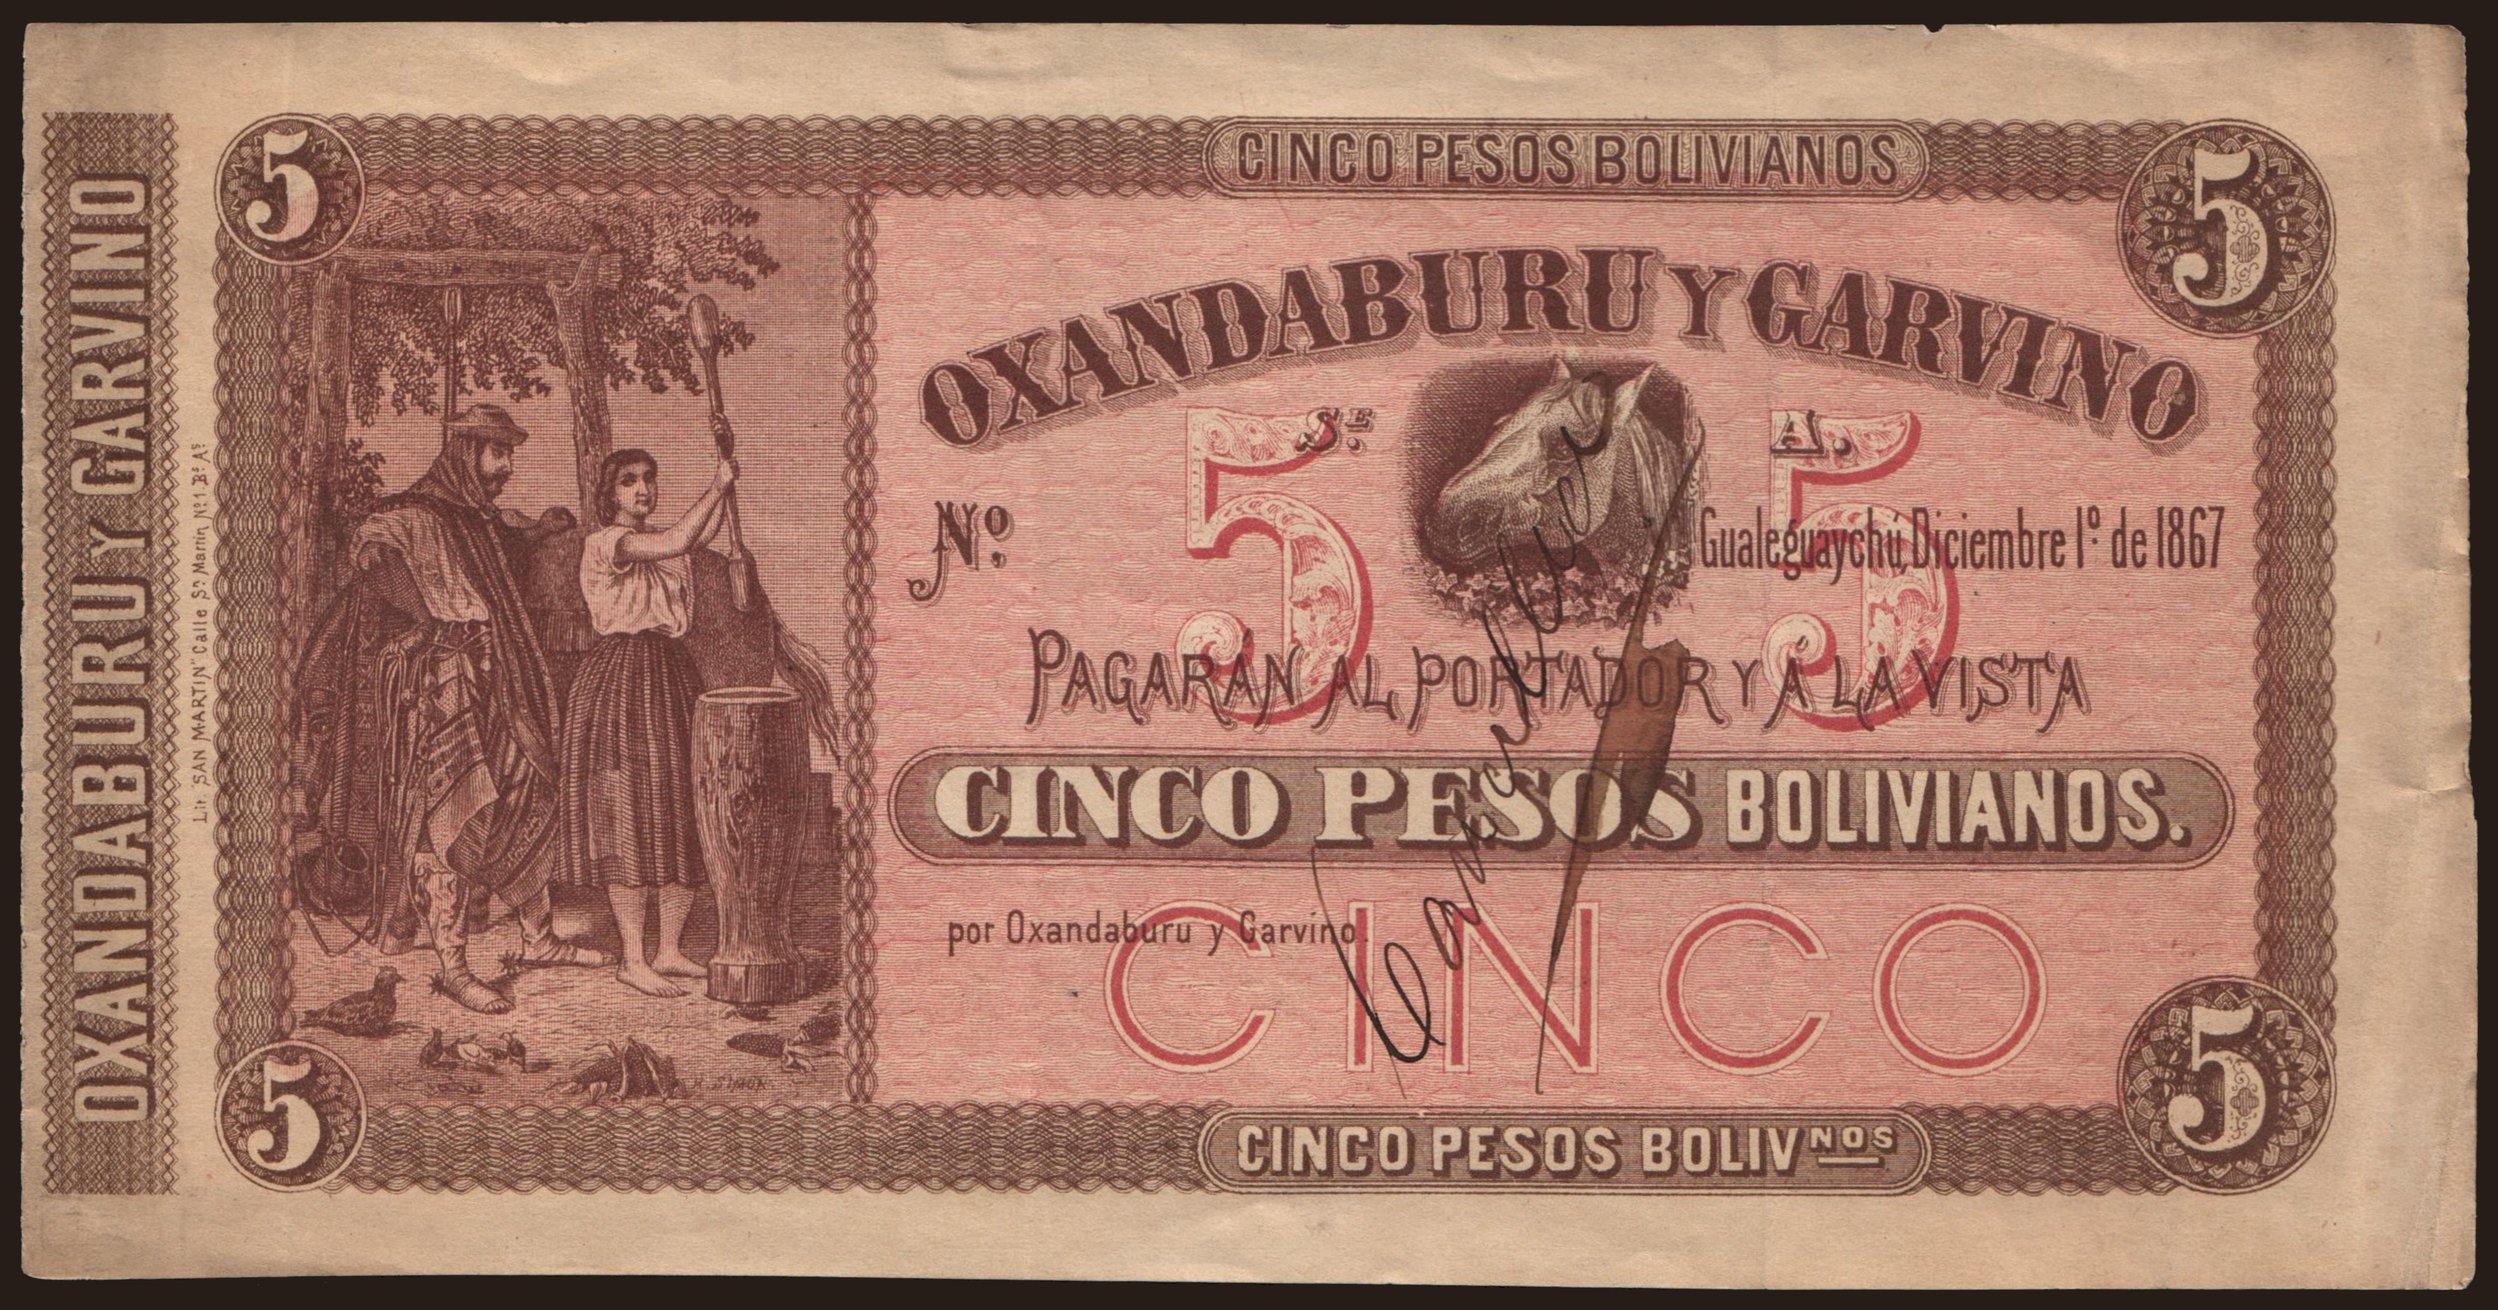 Oxandaburu y Garvino, 5 pesos, 1867